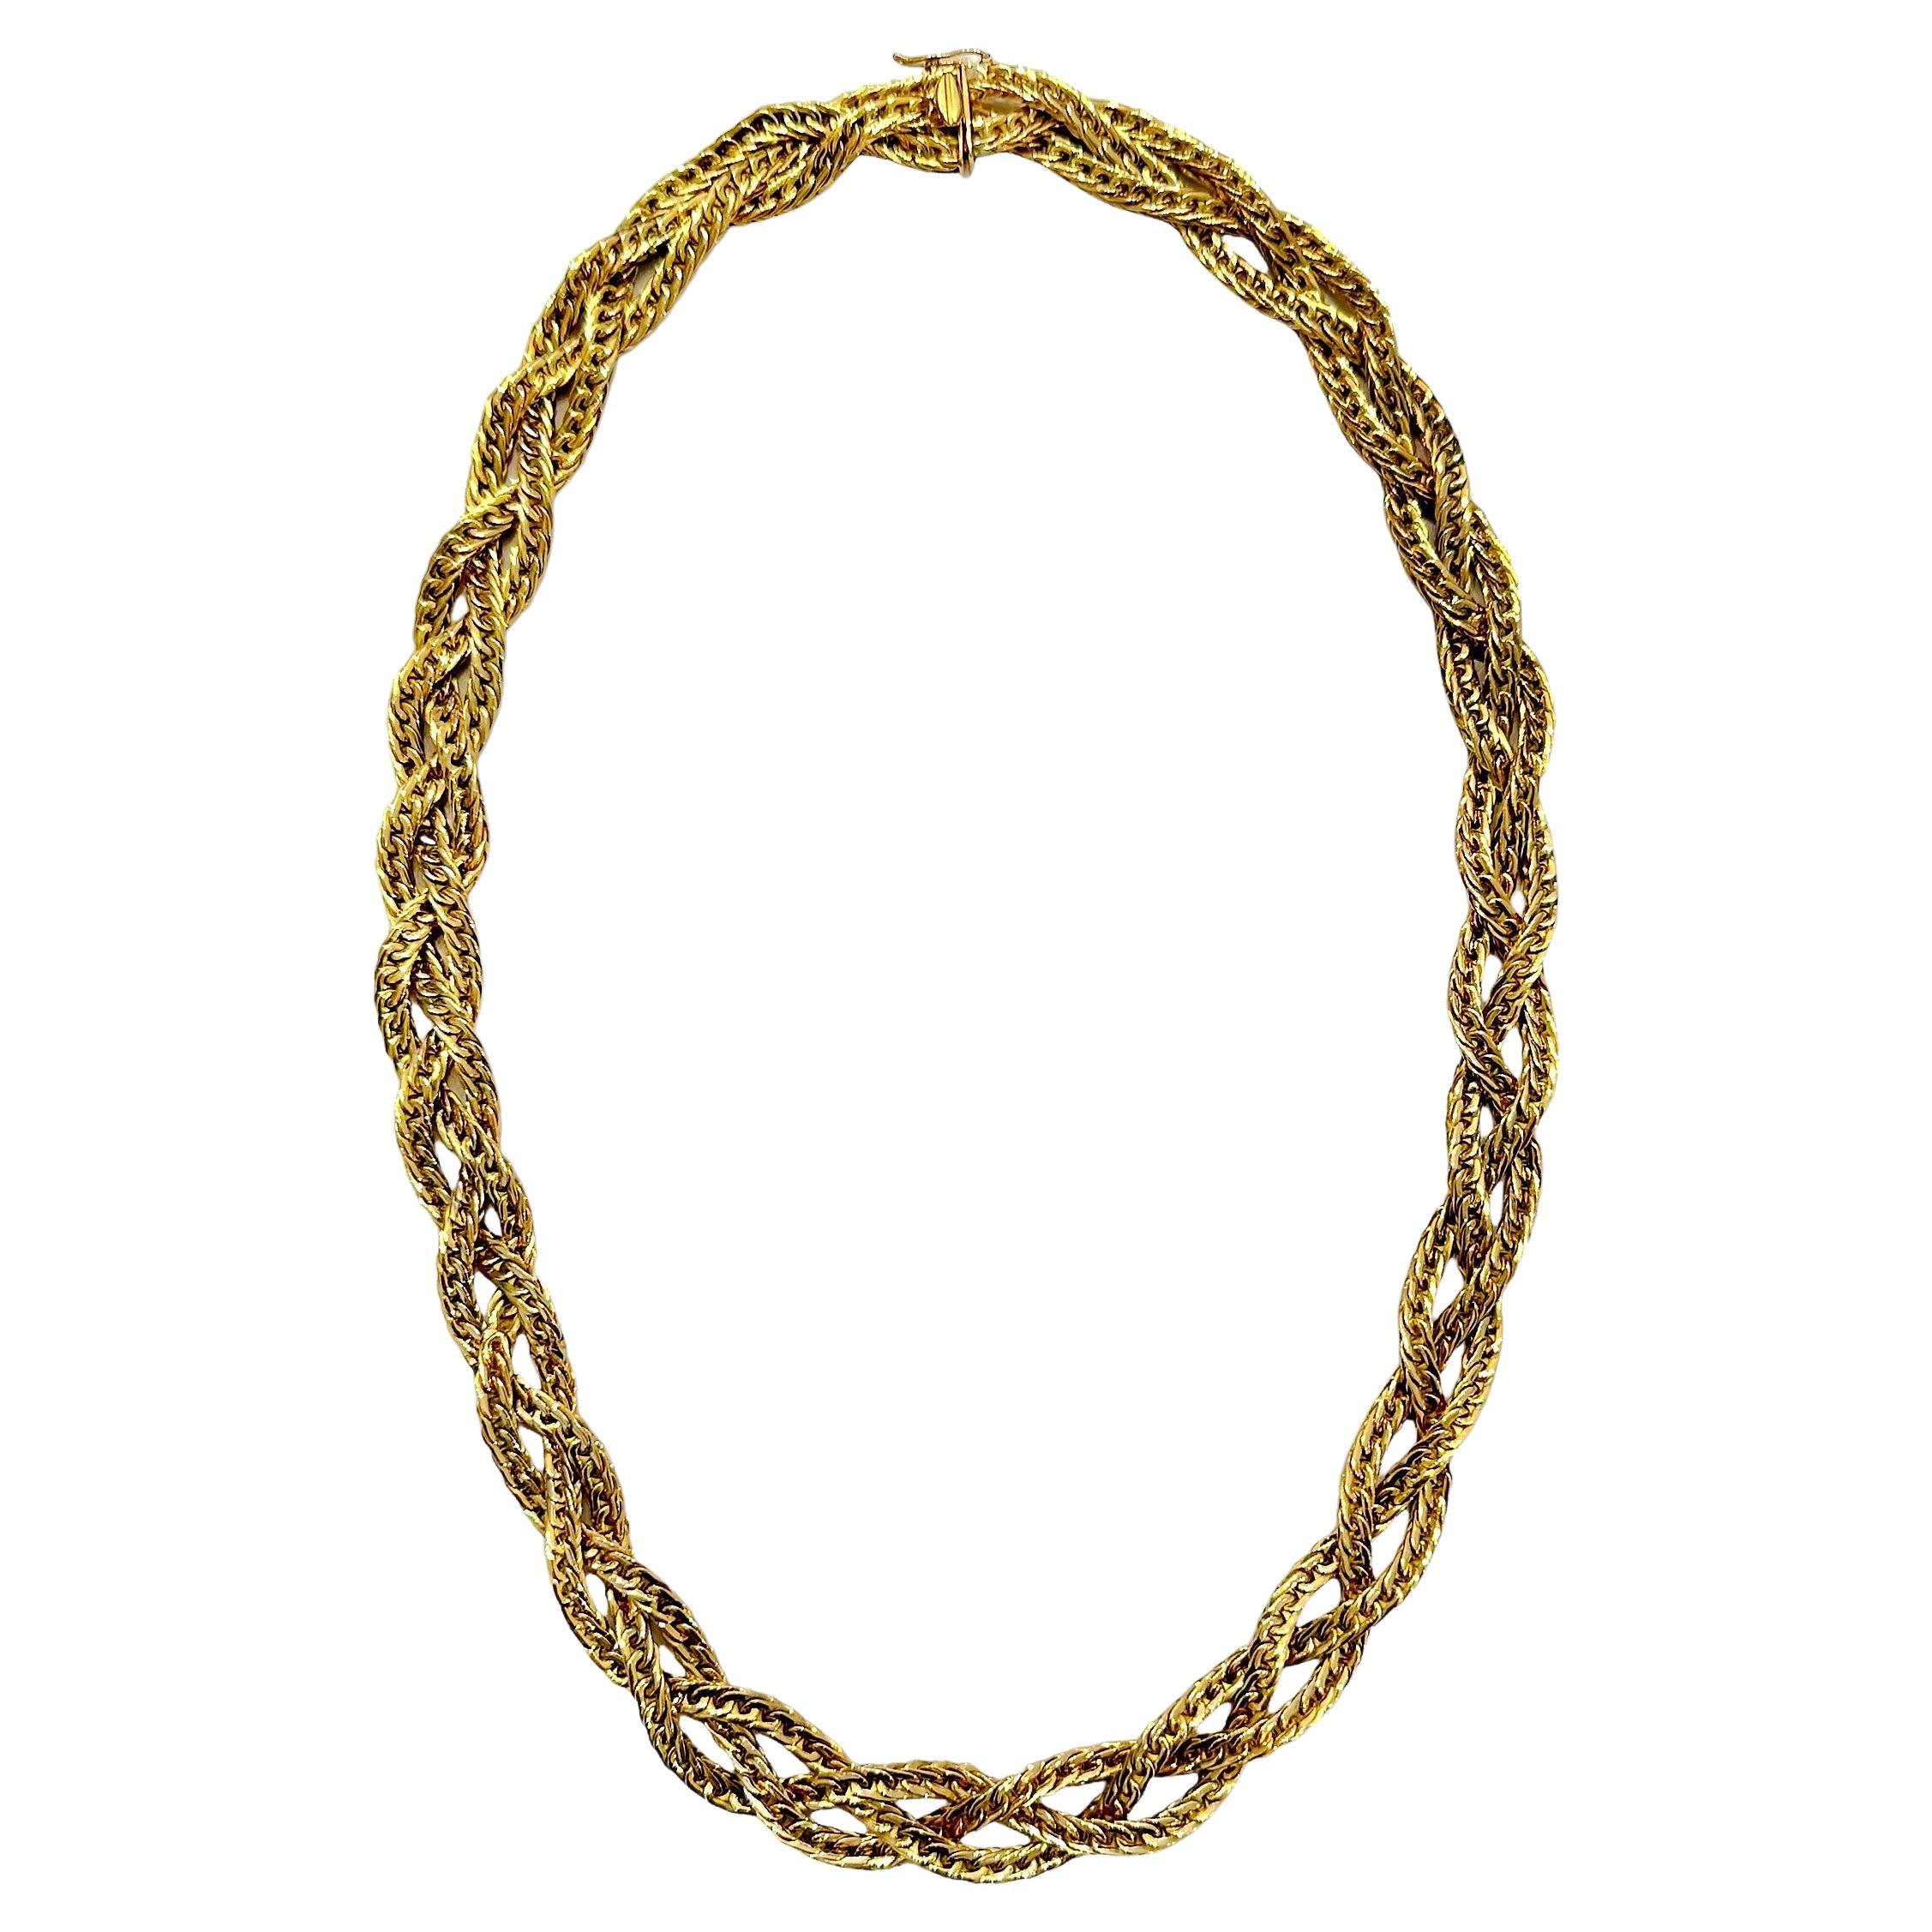 Elegant Italian 18k Gold 3 Strand Braided Necklace